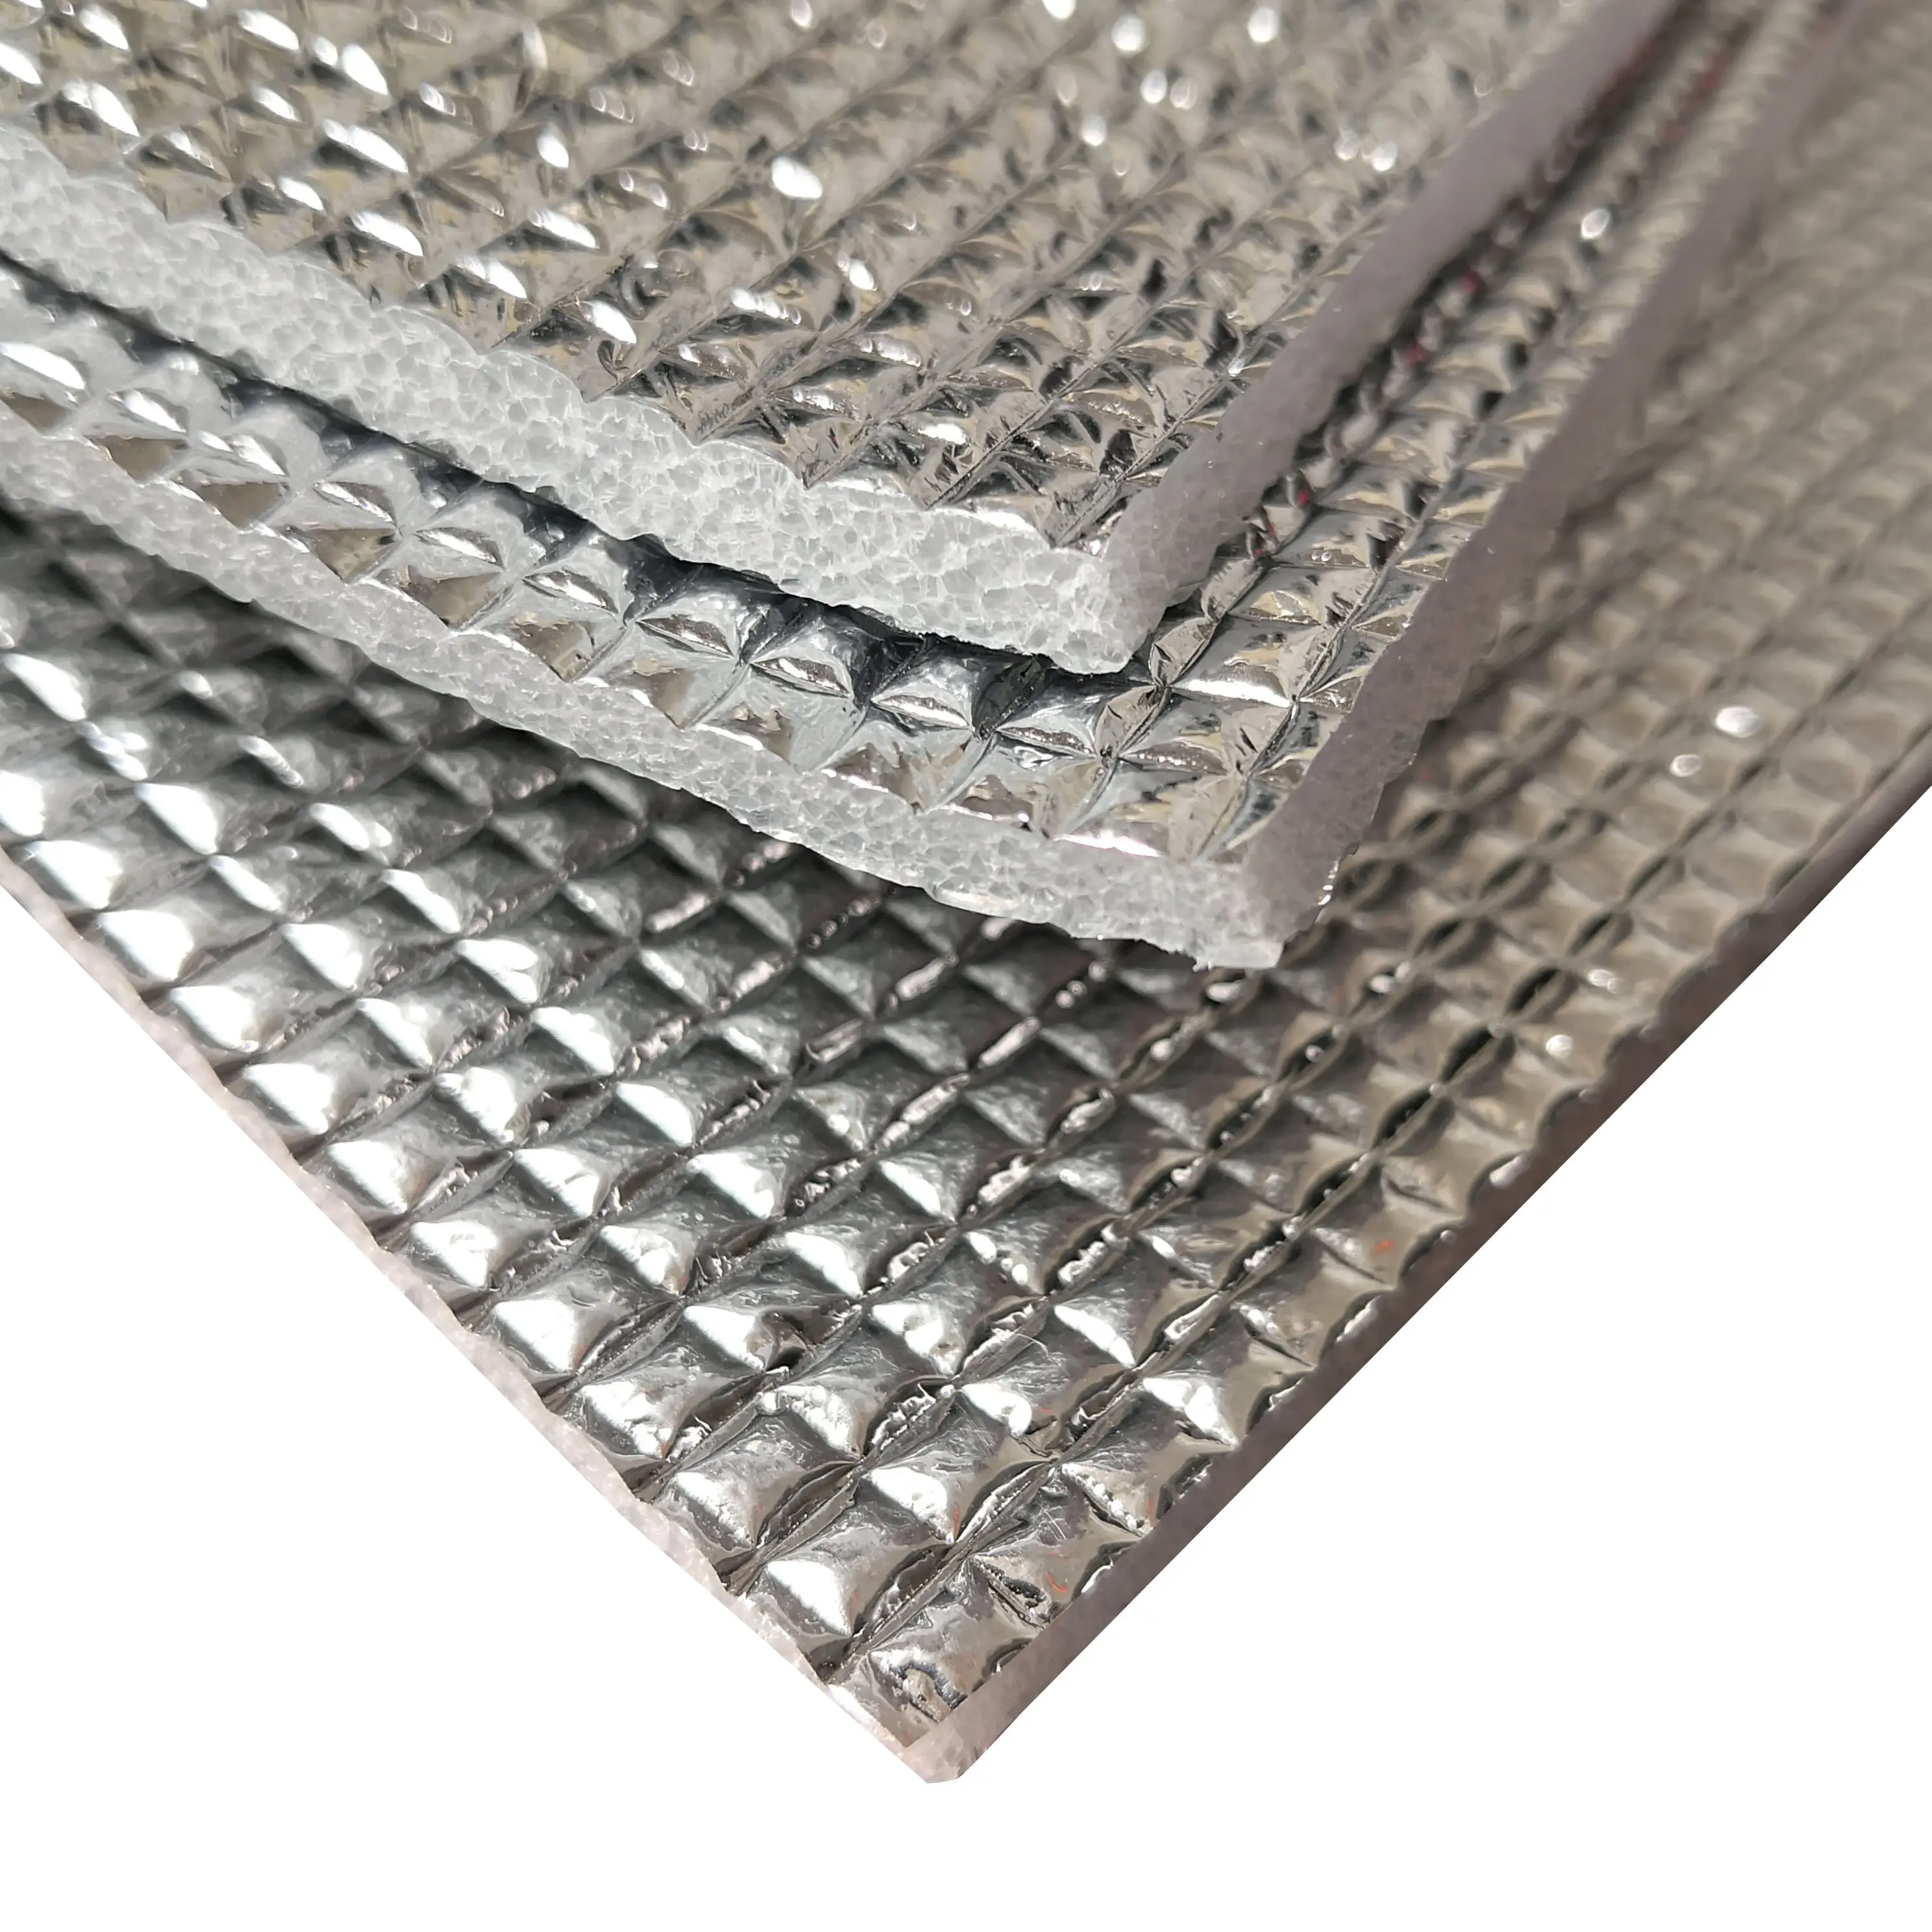 Reflective Foam Insulation Shield, Heat Shield, Thermal Insulation Shield Radiant Barrier 48 "x25ft 100sqft